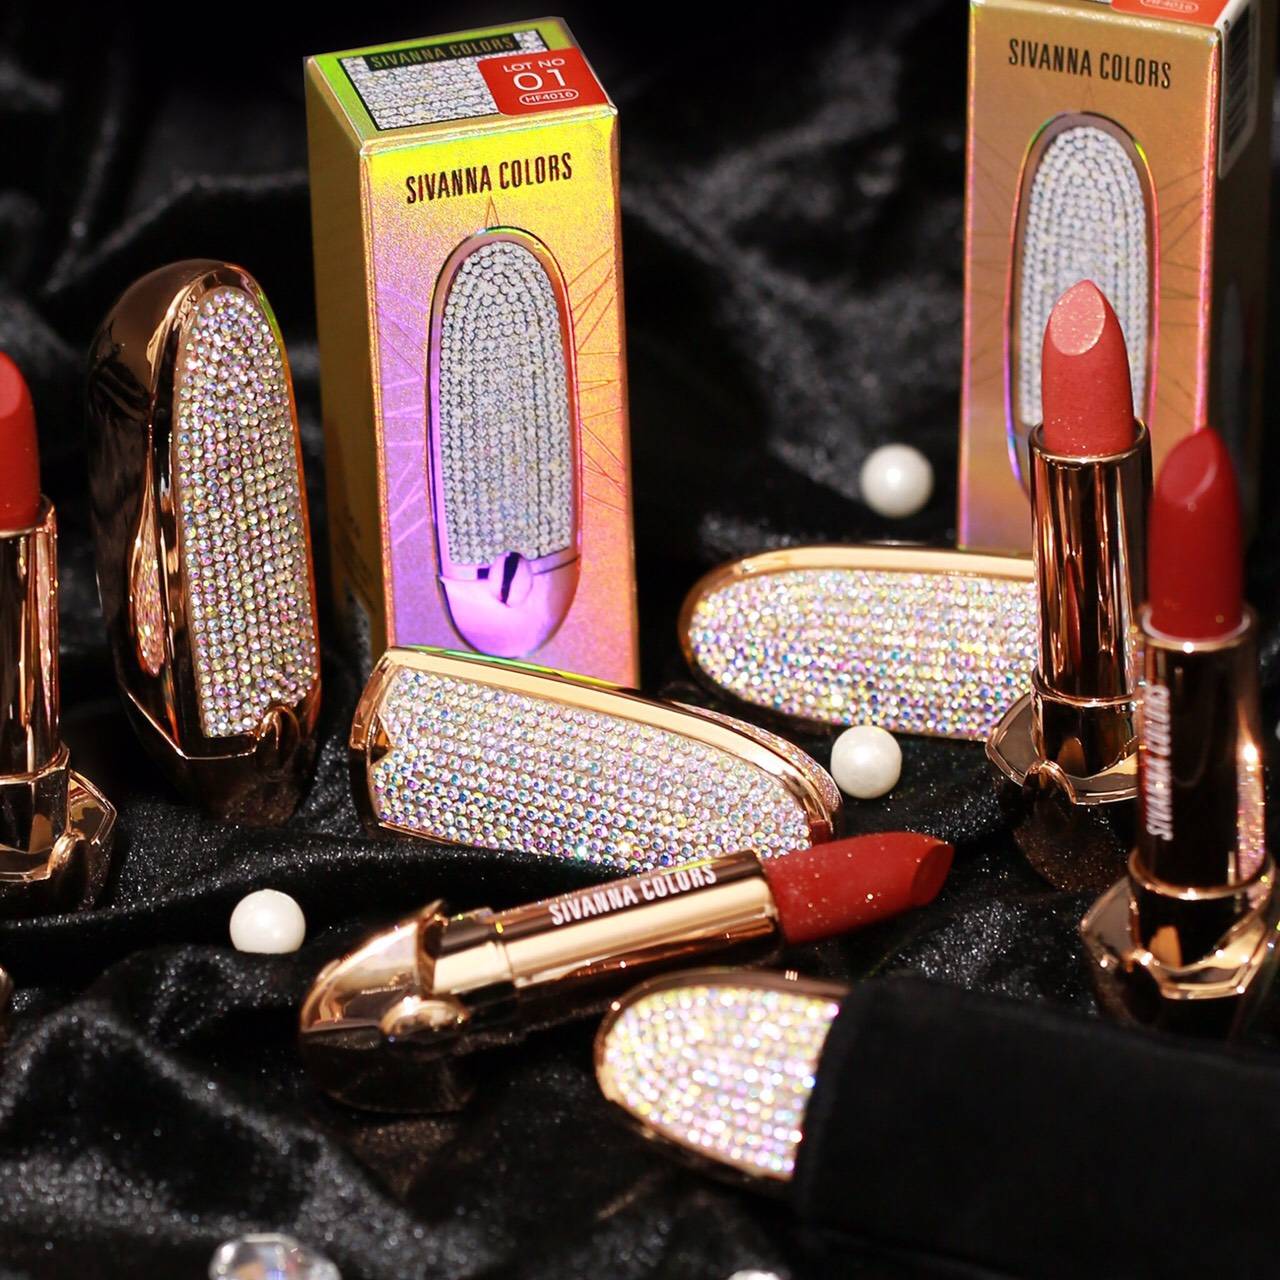 Sivanna Golden Diamond Starlight Lipstick #HF4016 : ซิวานน่า ลิป โกลเด้น ไดม่อนด์